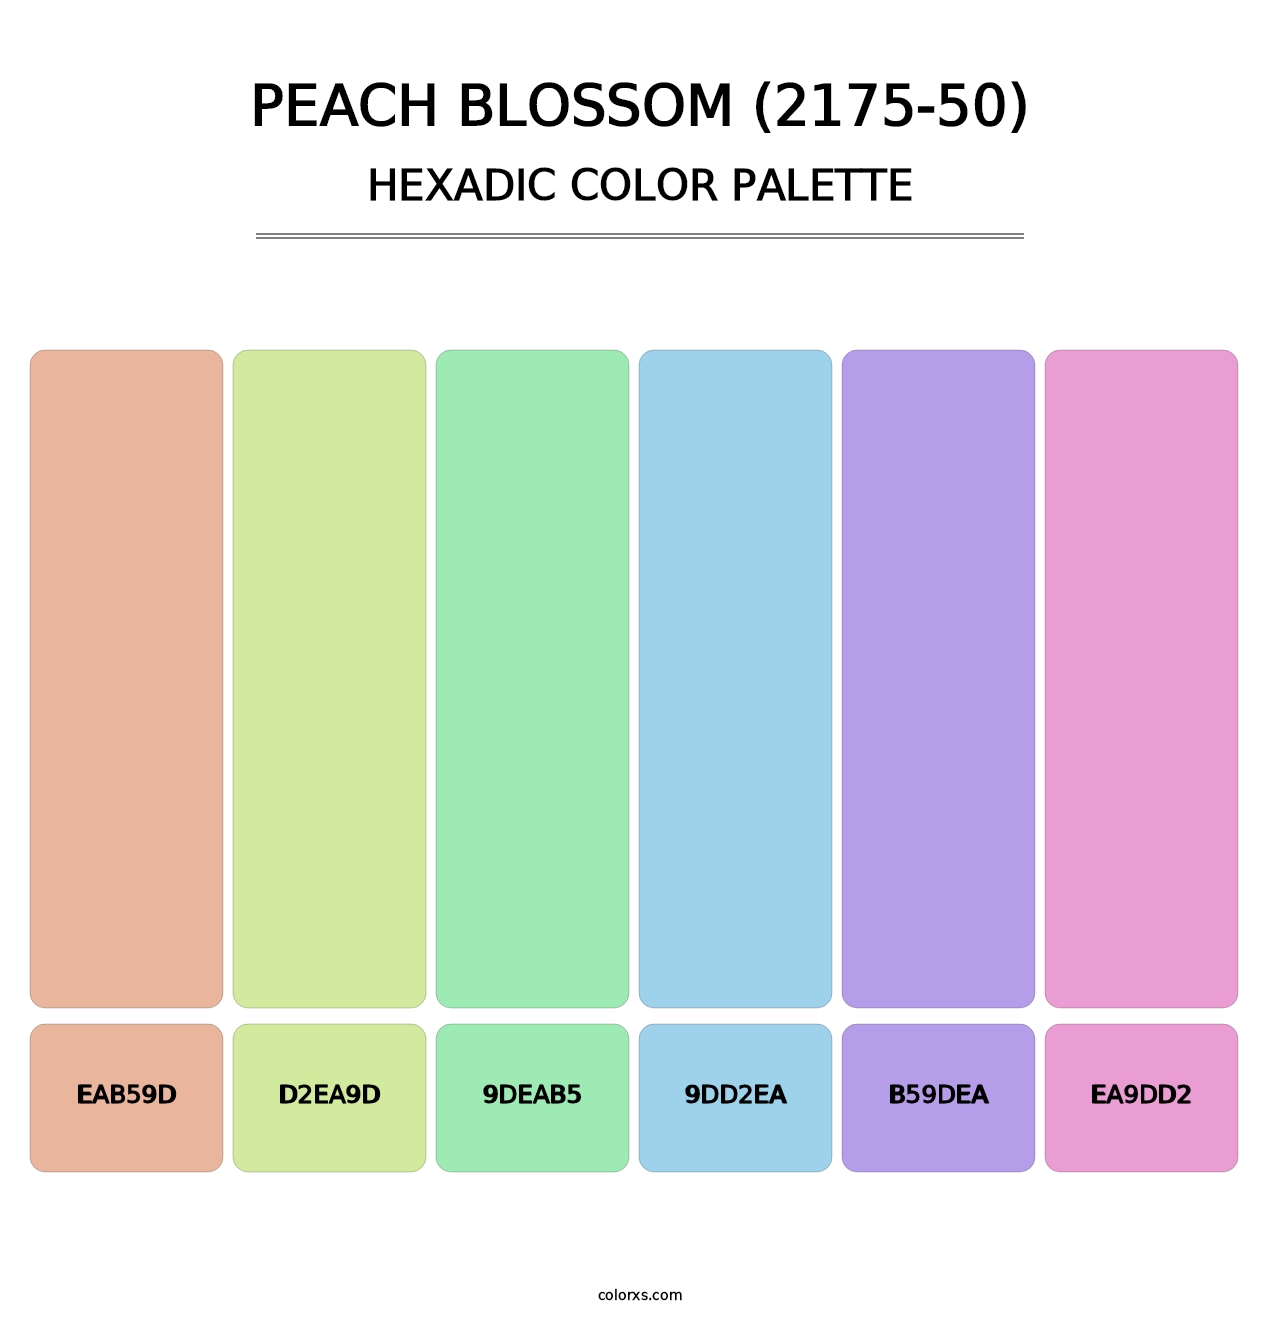 Peach Blossom (2175-50) - Hexadic Color Palette